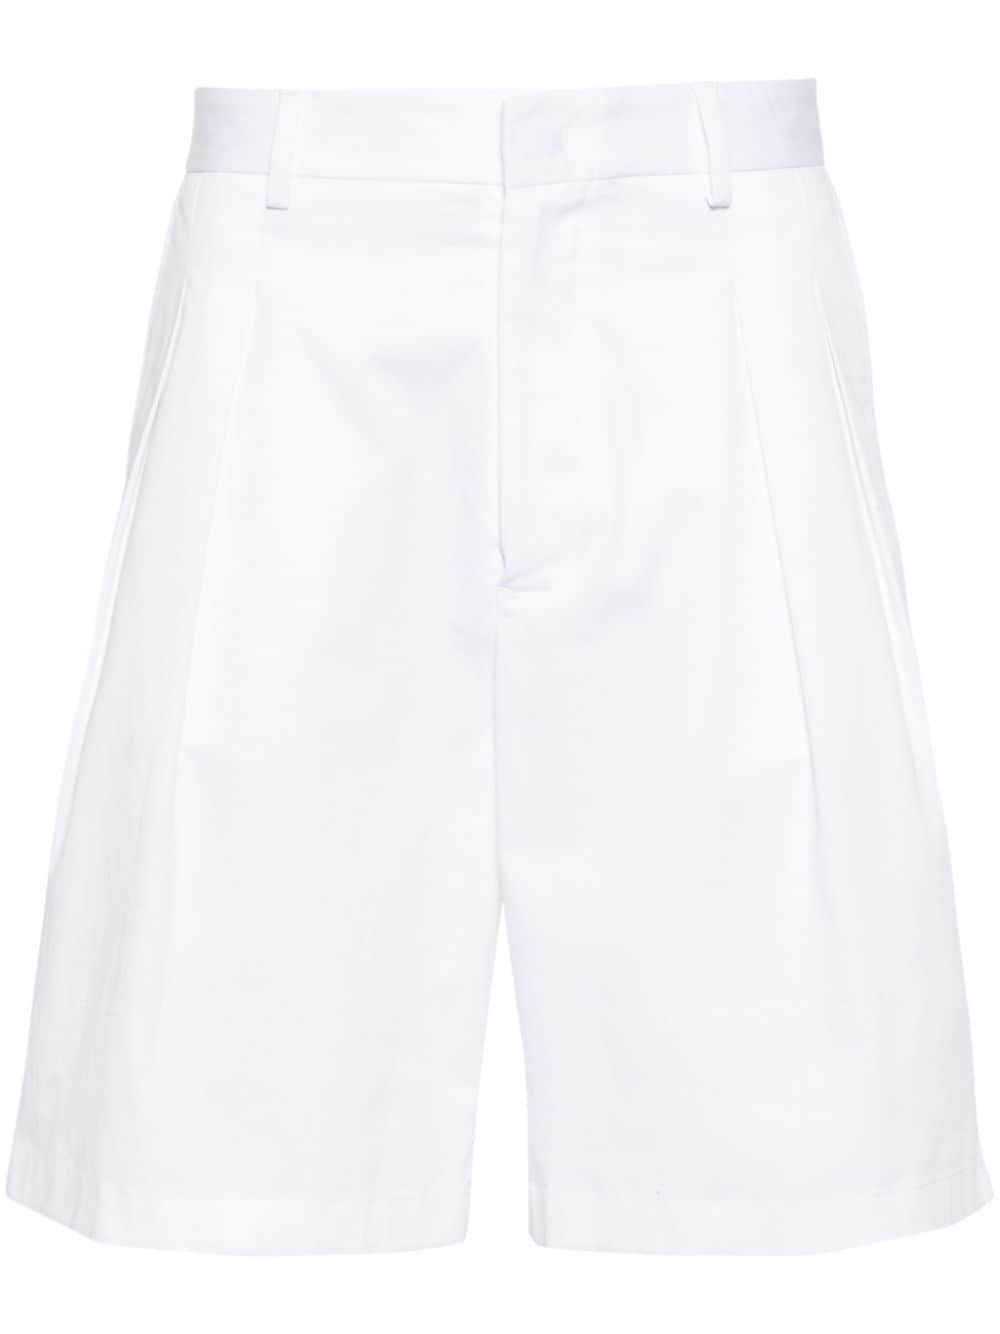 Miami tailored shorts